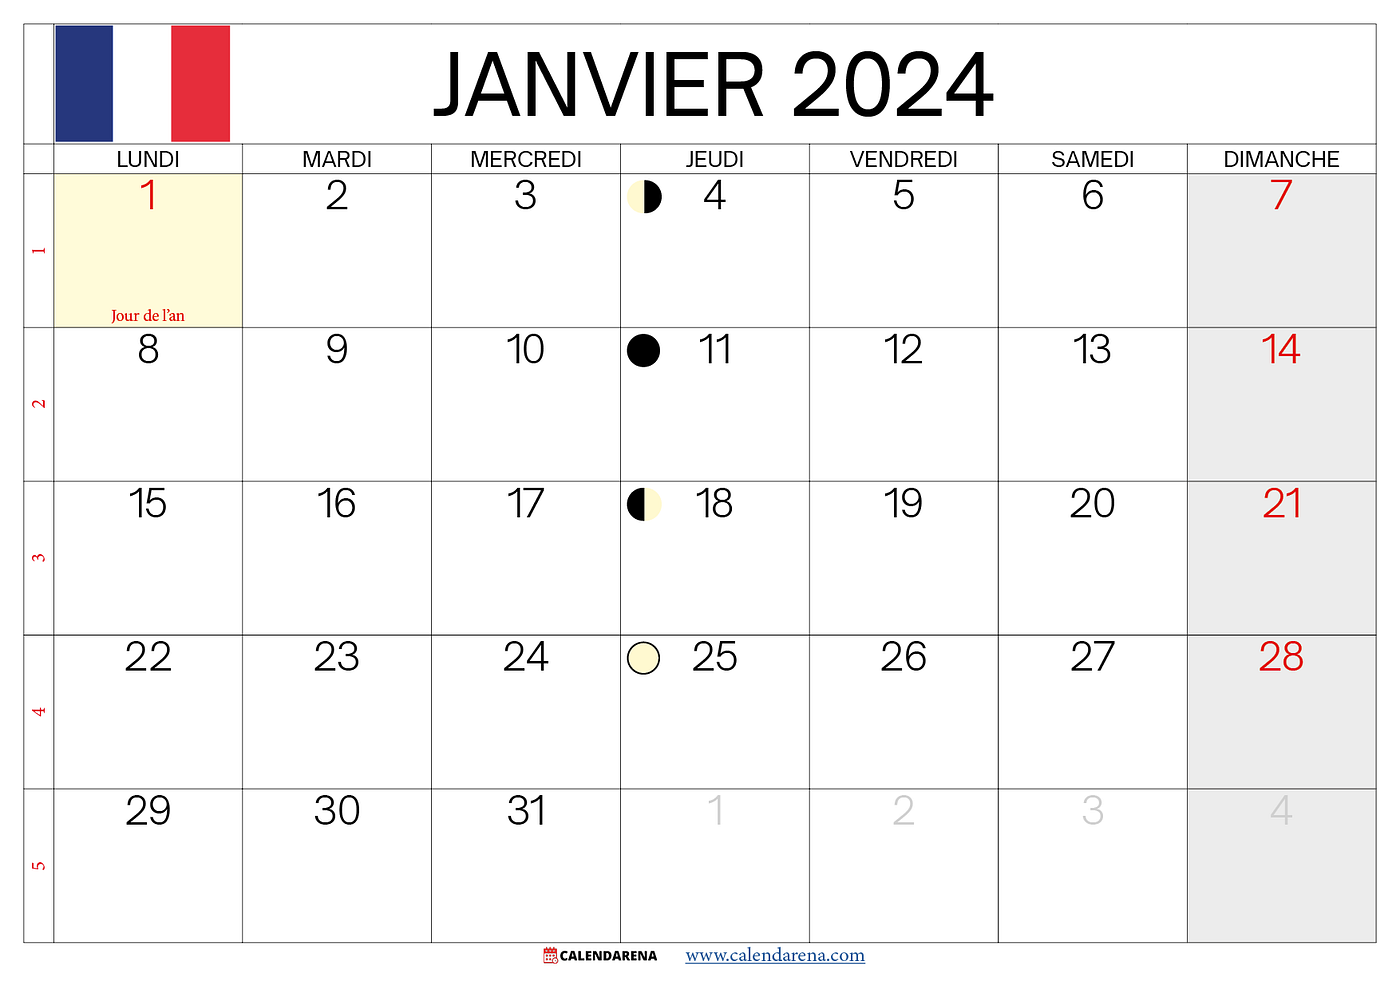 Calendrier janvier 2024